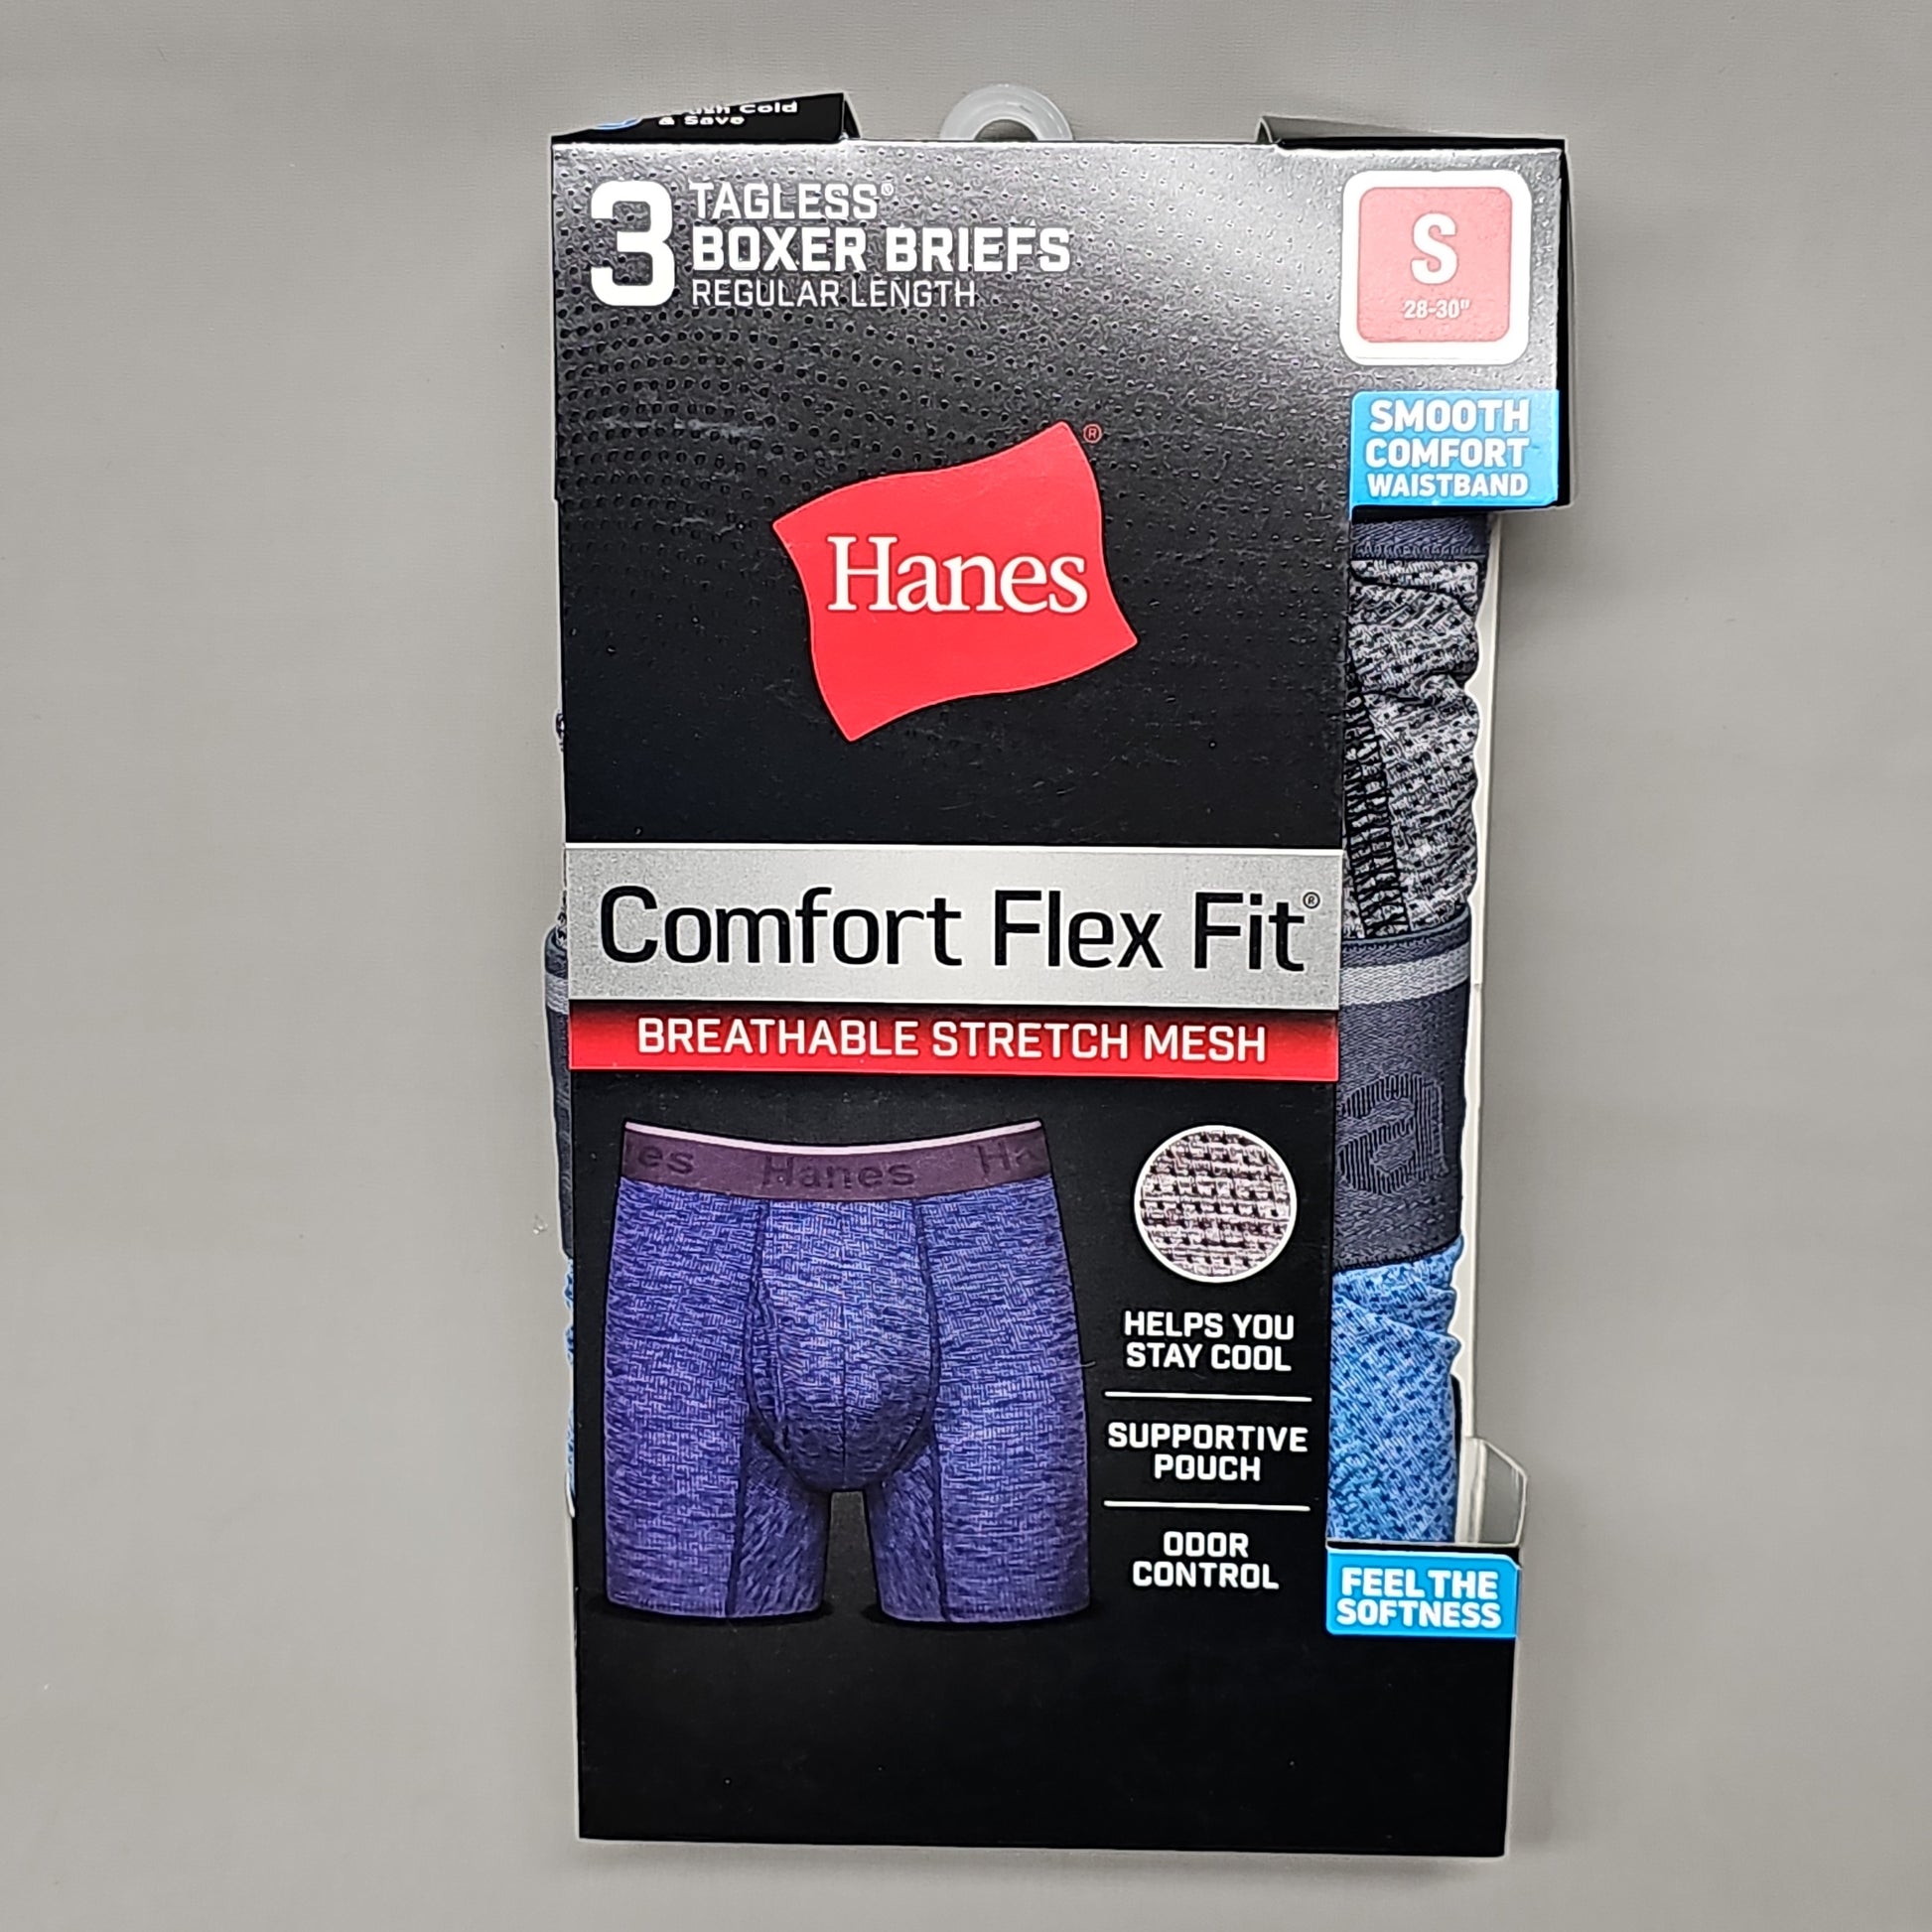 Hanes New Hanes Tagless Boxer Briefs 3 Pack Men's Size Small (28-30)  Comfort Flex